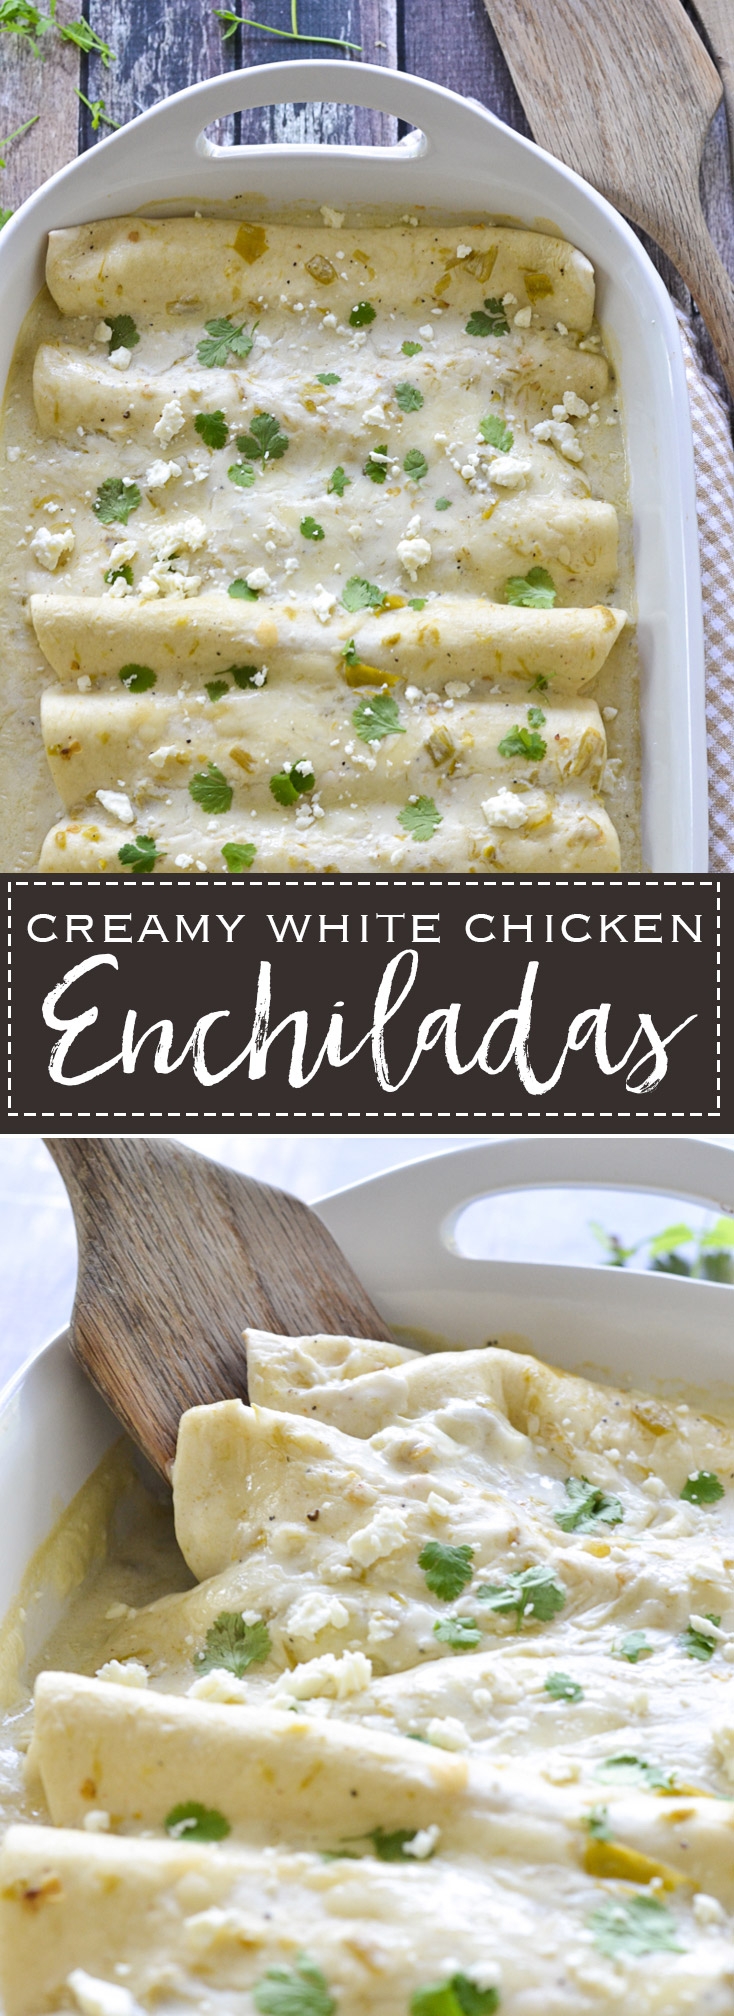 Creamy White Chicken Enchiladas | www.motherthyme.com